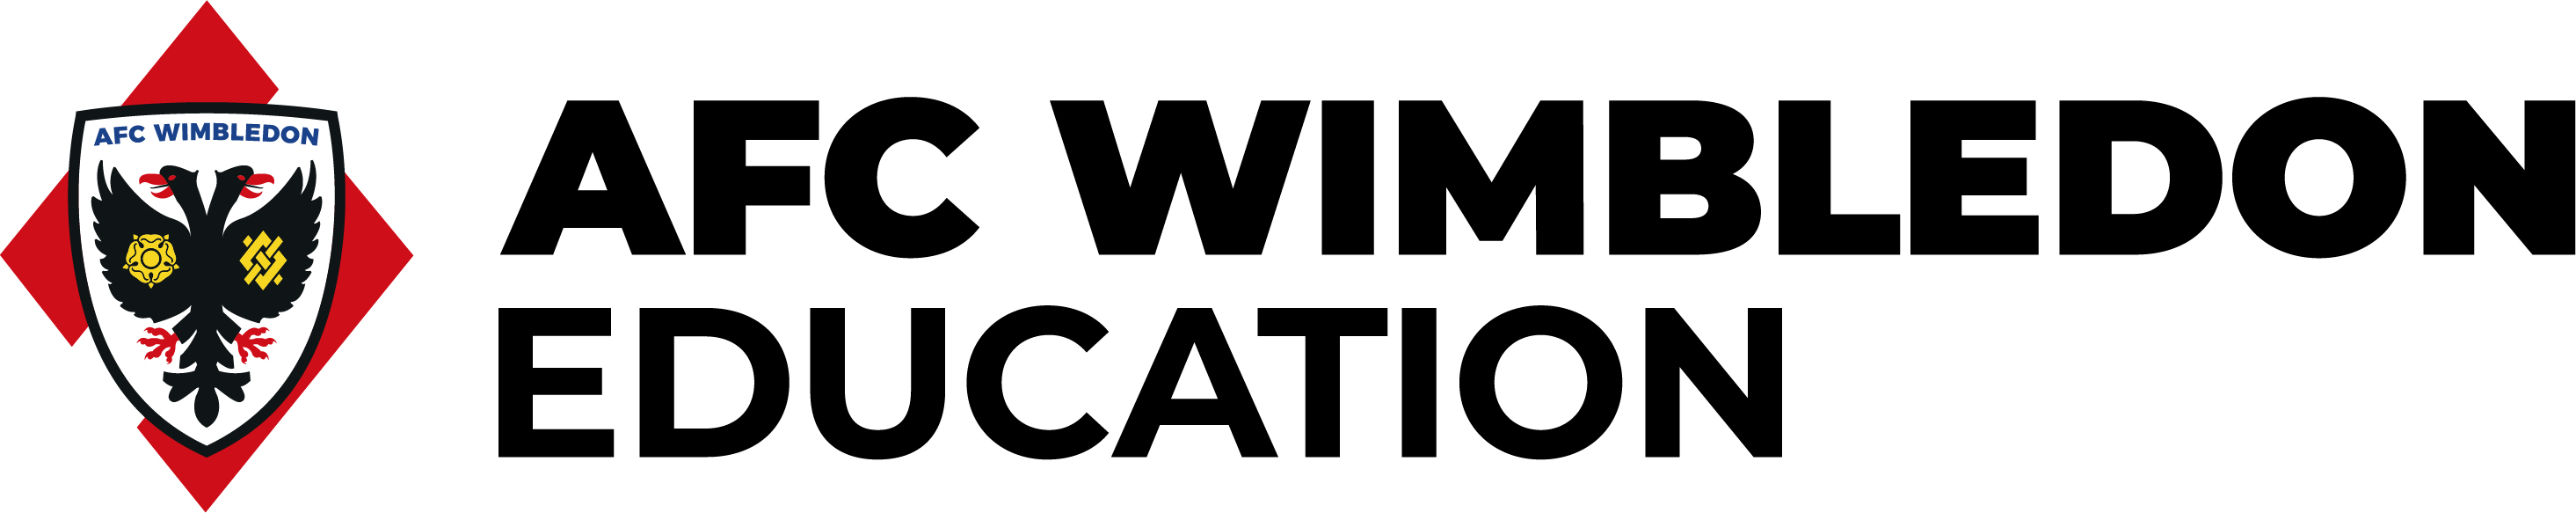 afc wimbledon education logo 